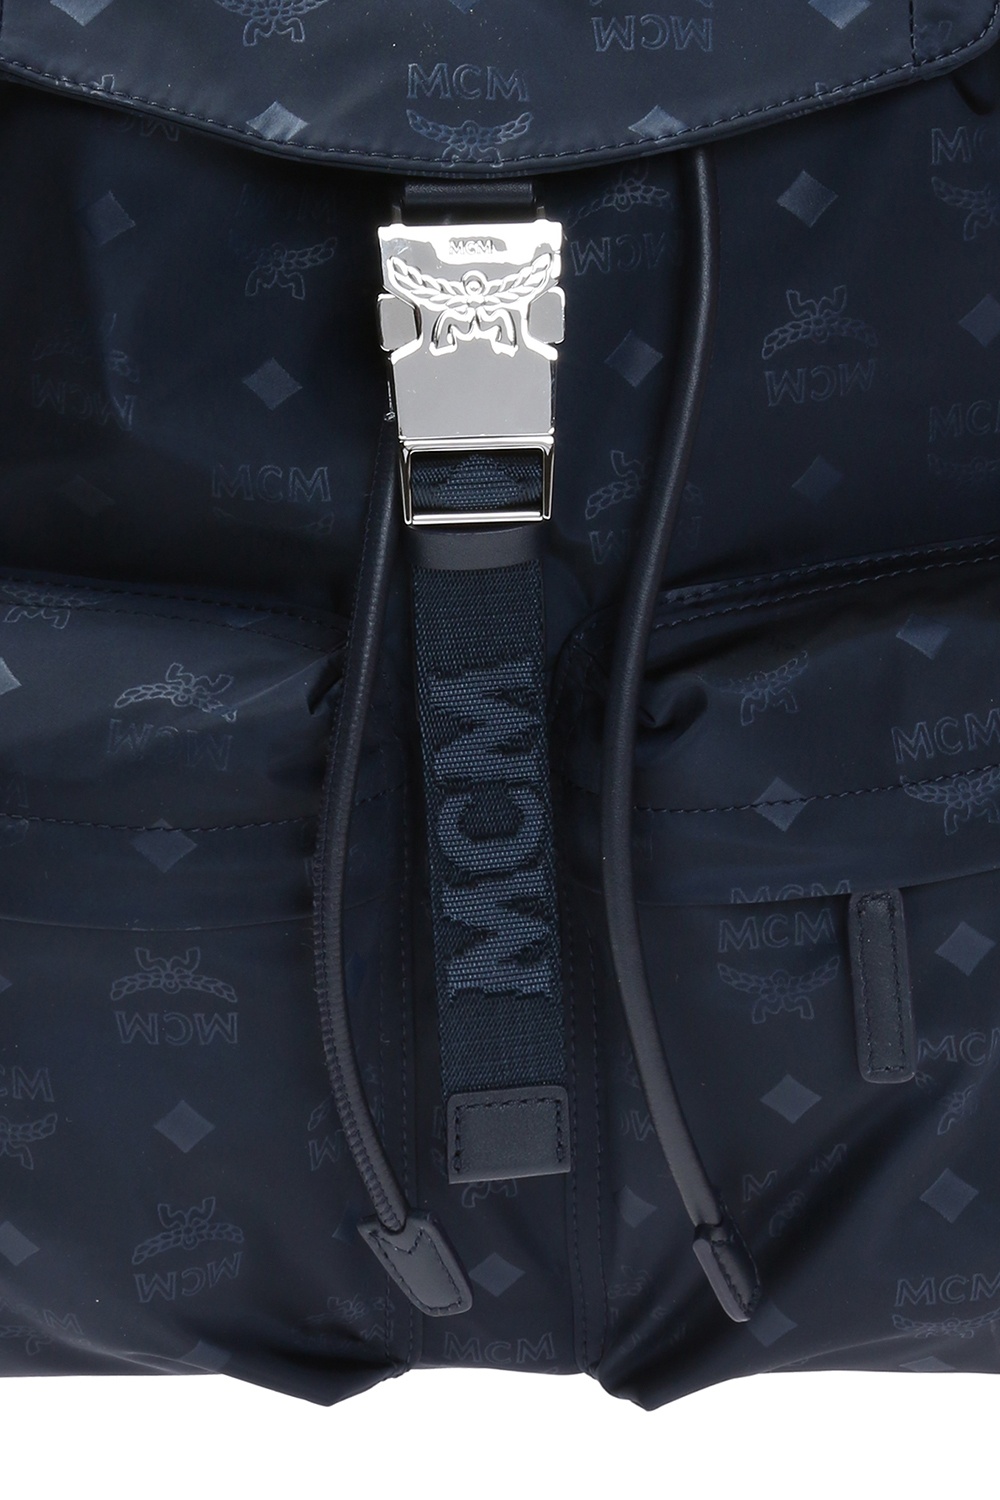 Blue Backpack with logo MCM - Vitkac TW